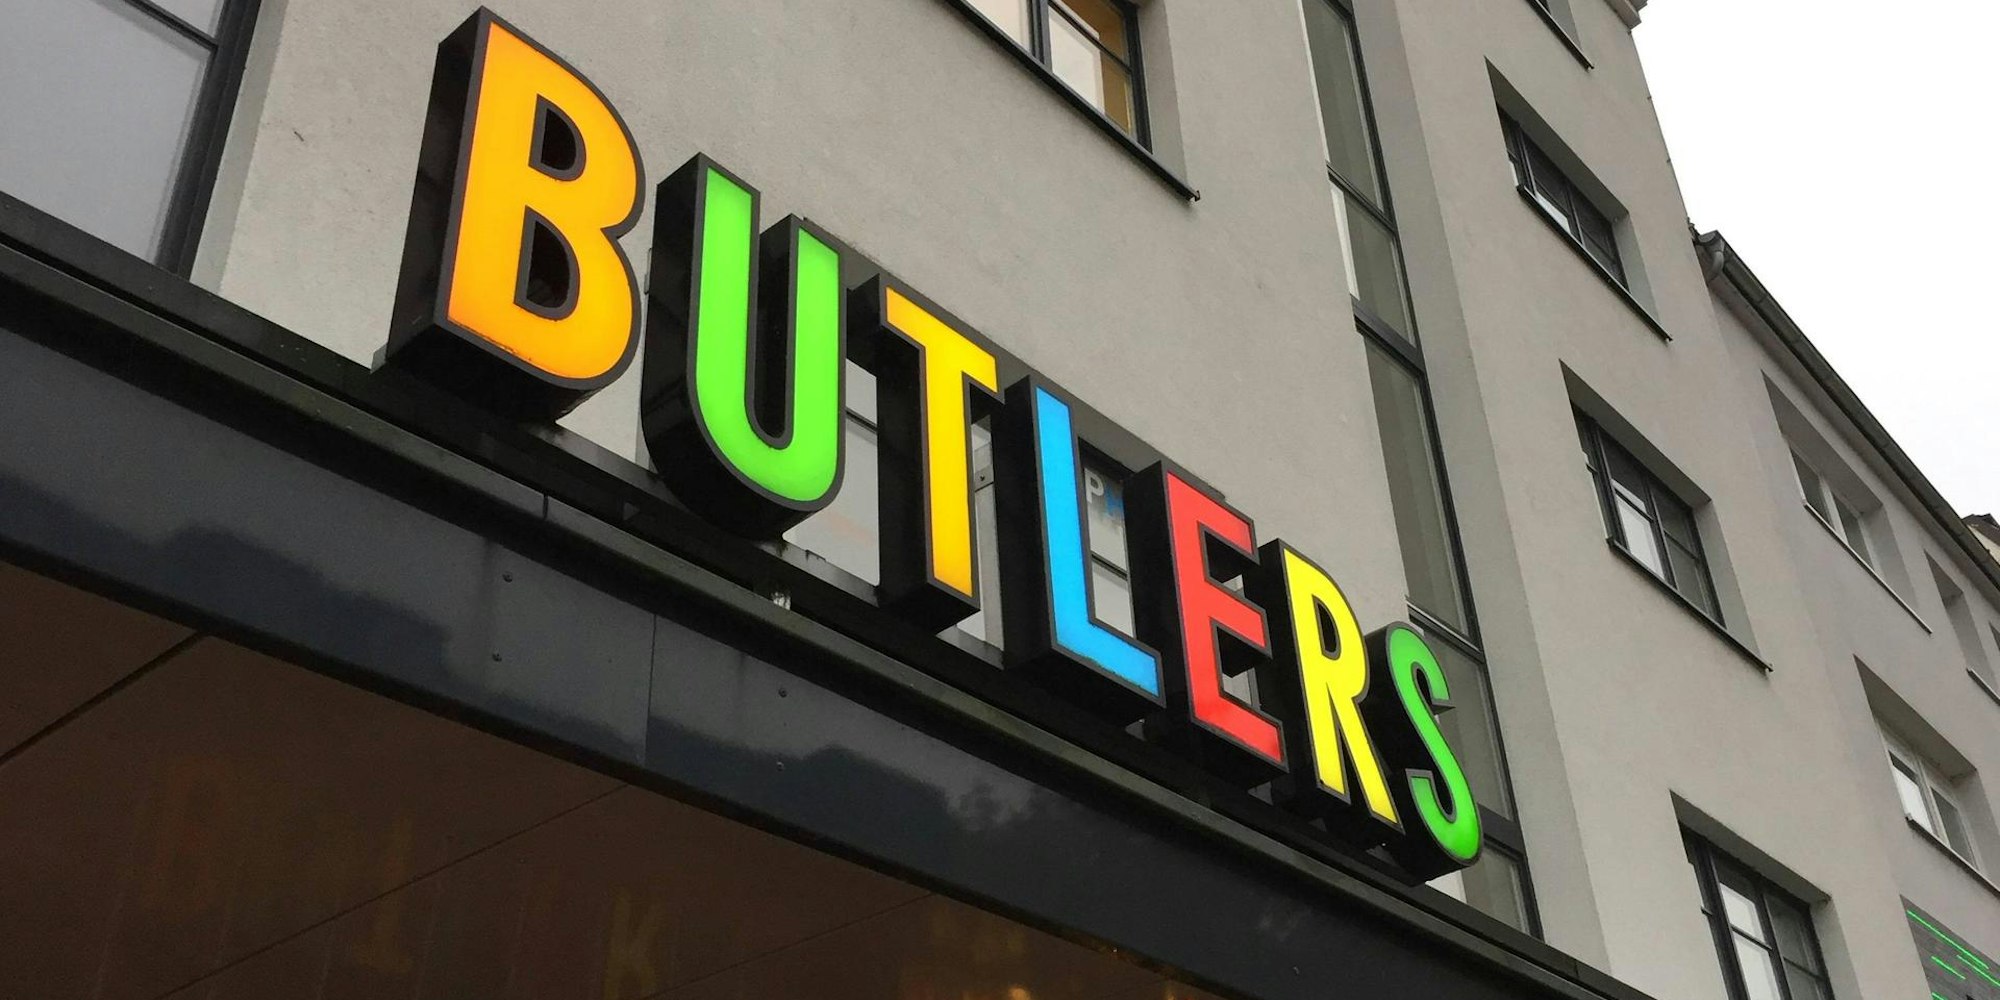 Butlers IMAGO